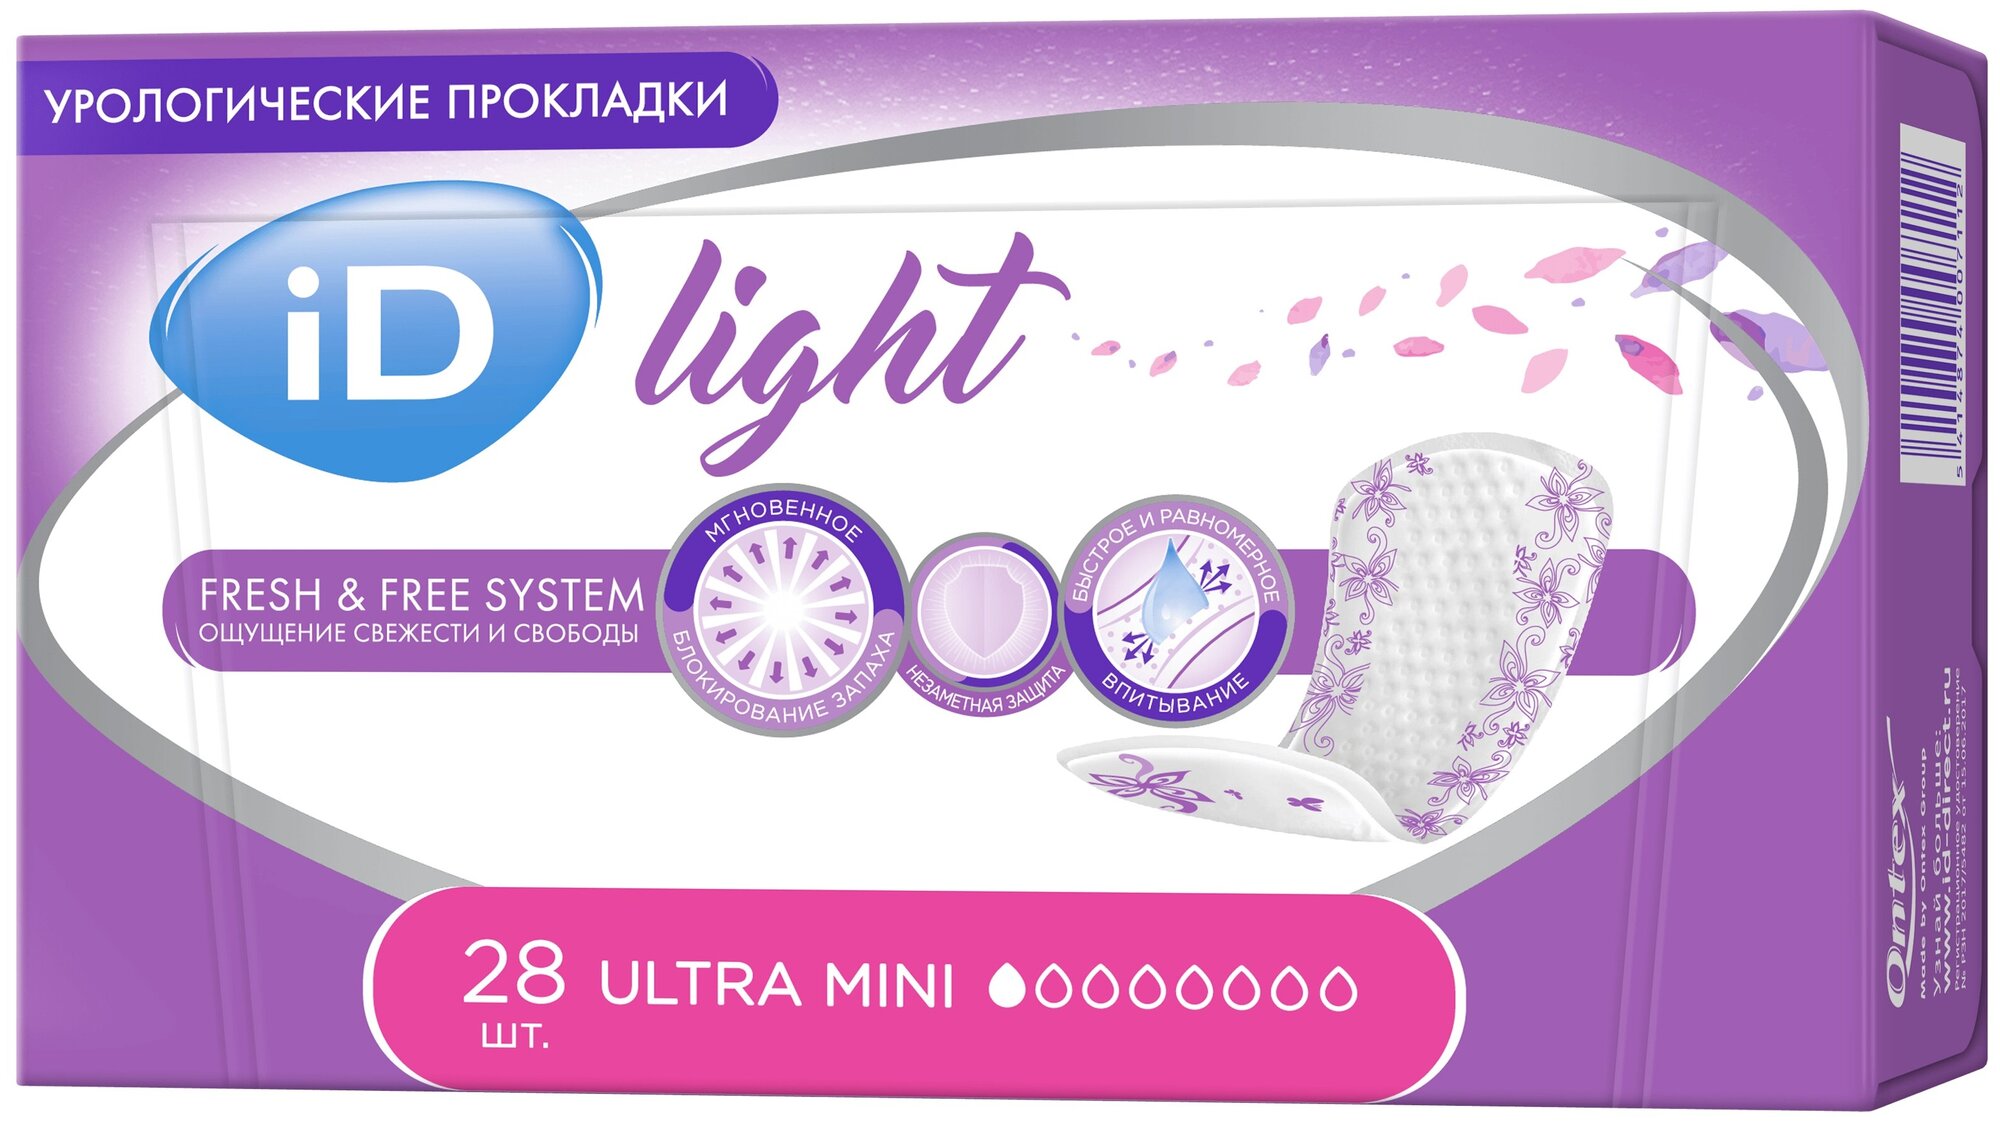 Прокладки iD Light Ultra mini 28 шт урологические (АйДи анамини)